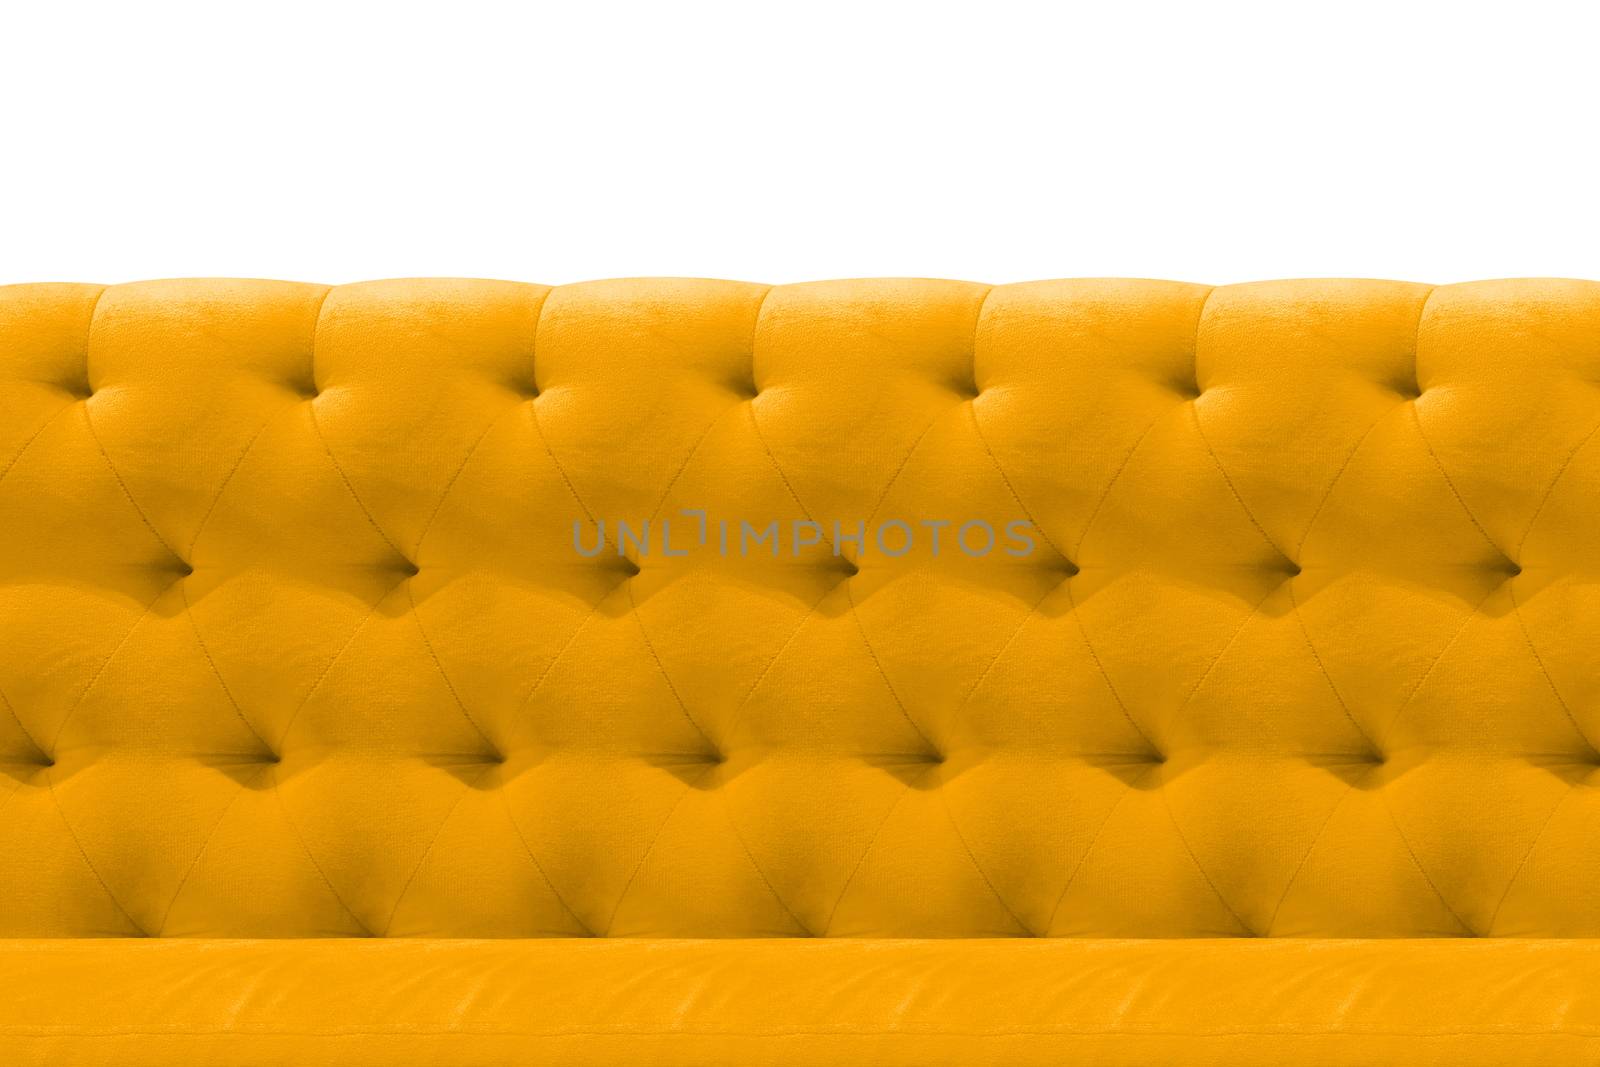 Luxury Yellow or Gold sofa velvet cushion close-up pattern background on white